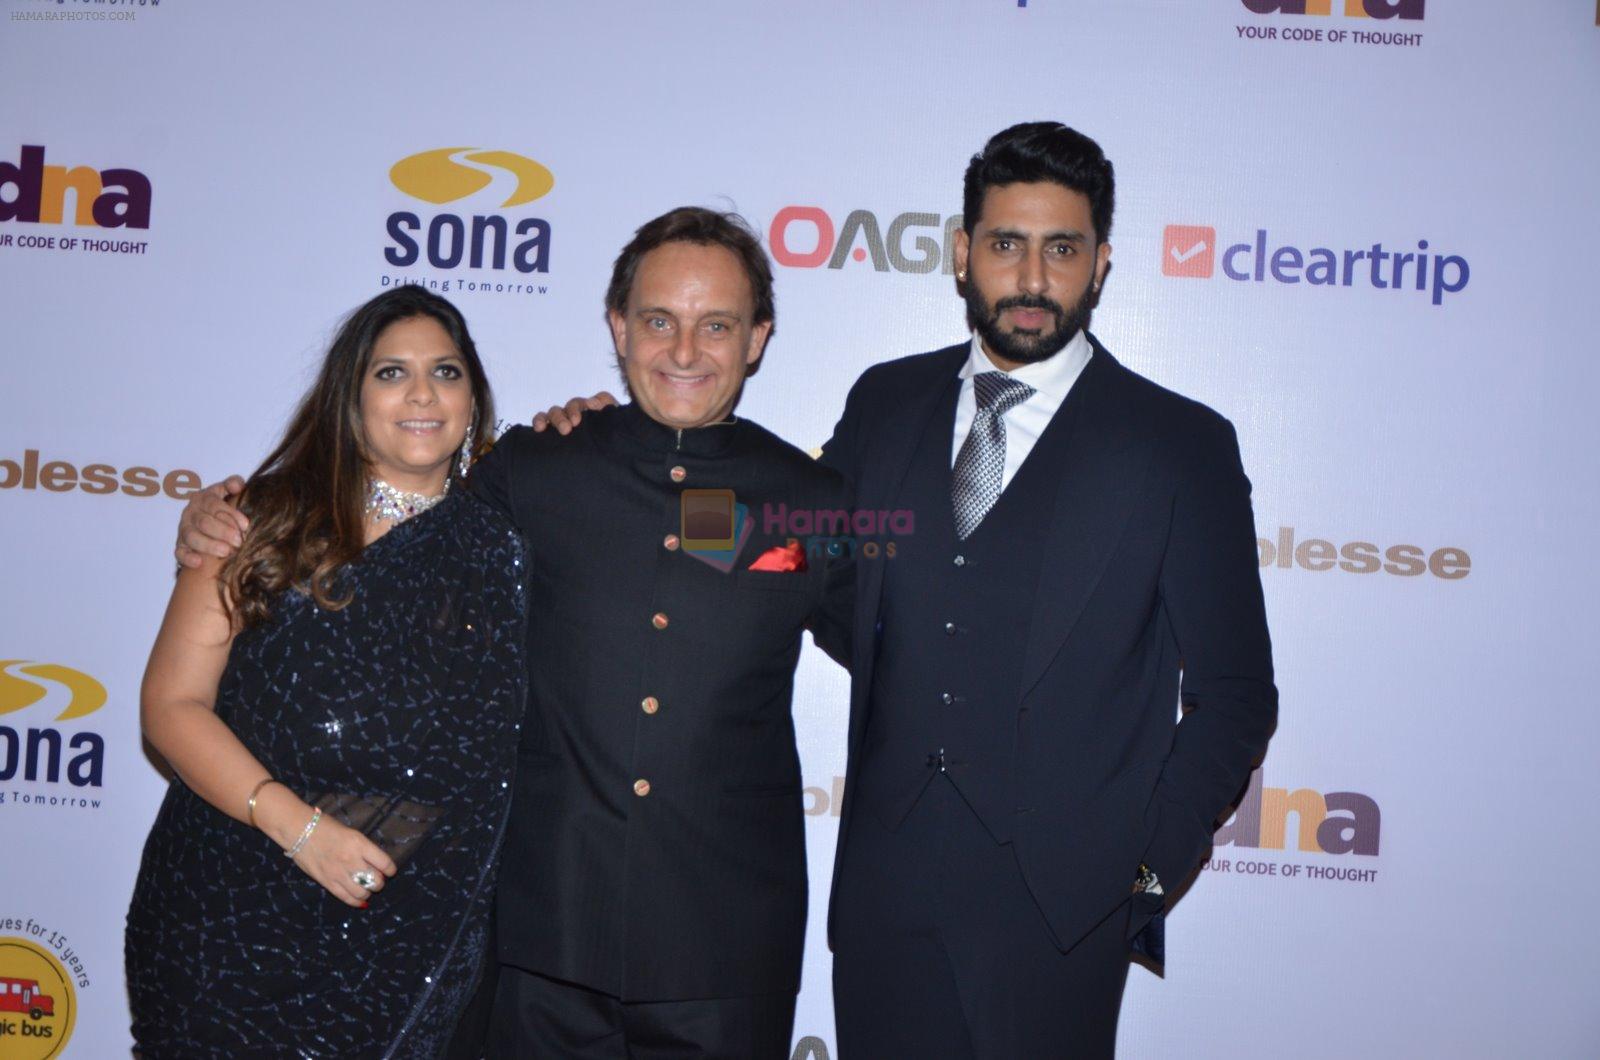 Abhishek Bachchan at Magic Bus charity dinner in Mumbai on 18th Dec 2014